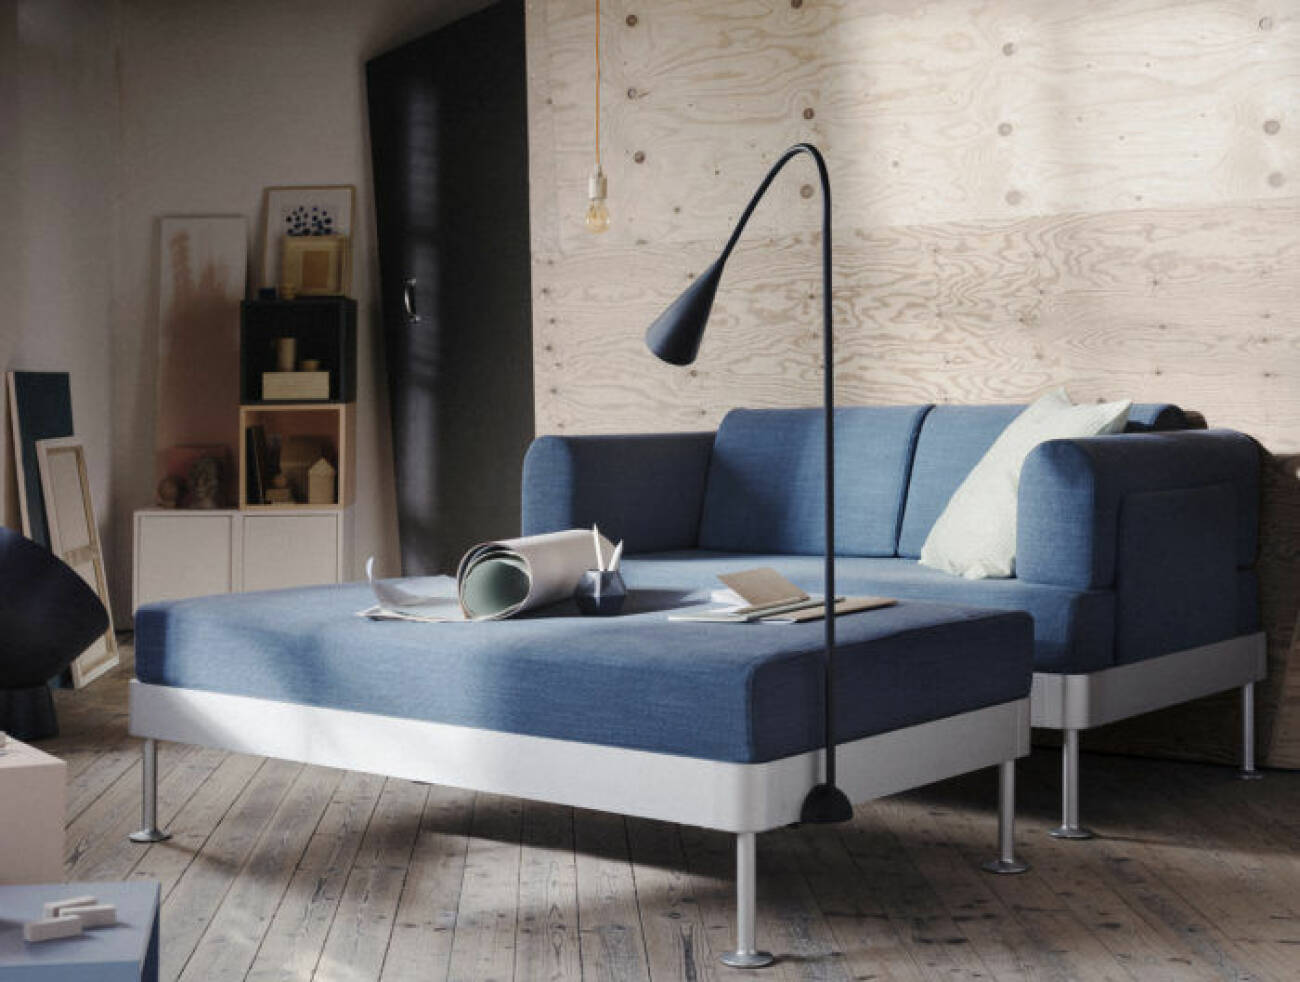 Blåa möbler ur Ikeas kollektion Delaktig, design Tom Dixon